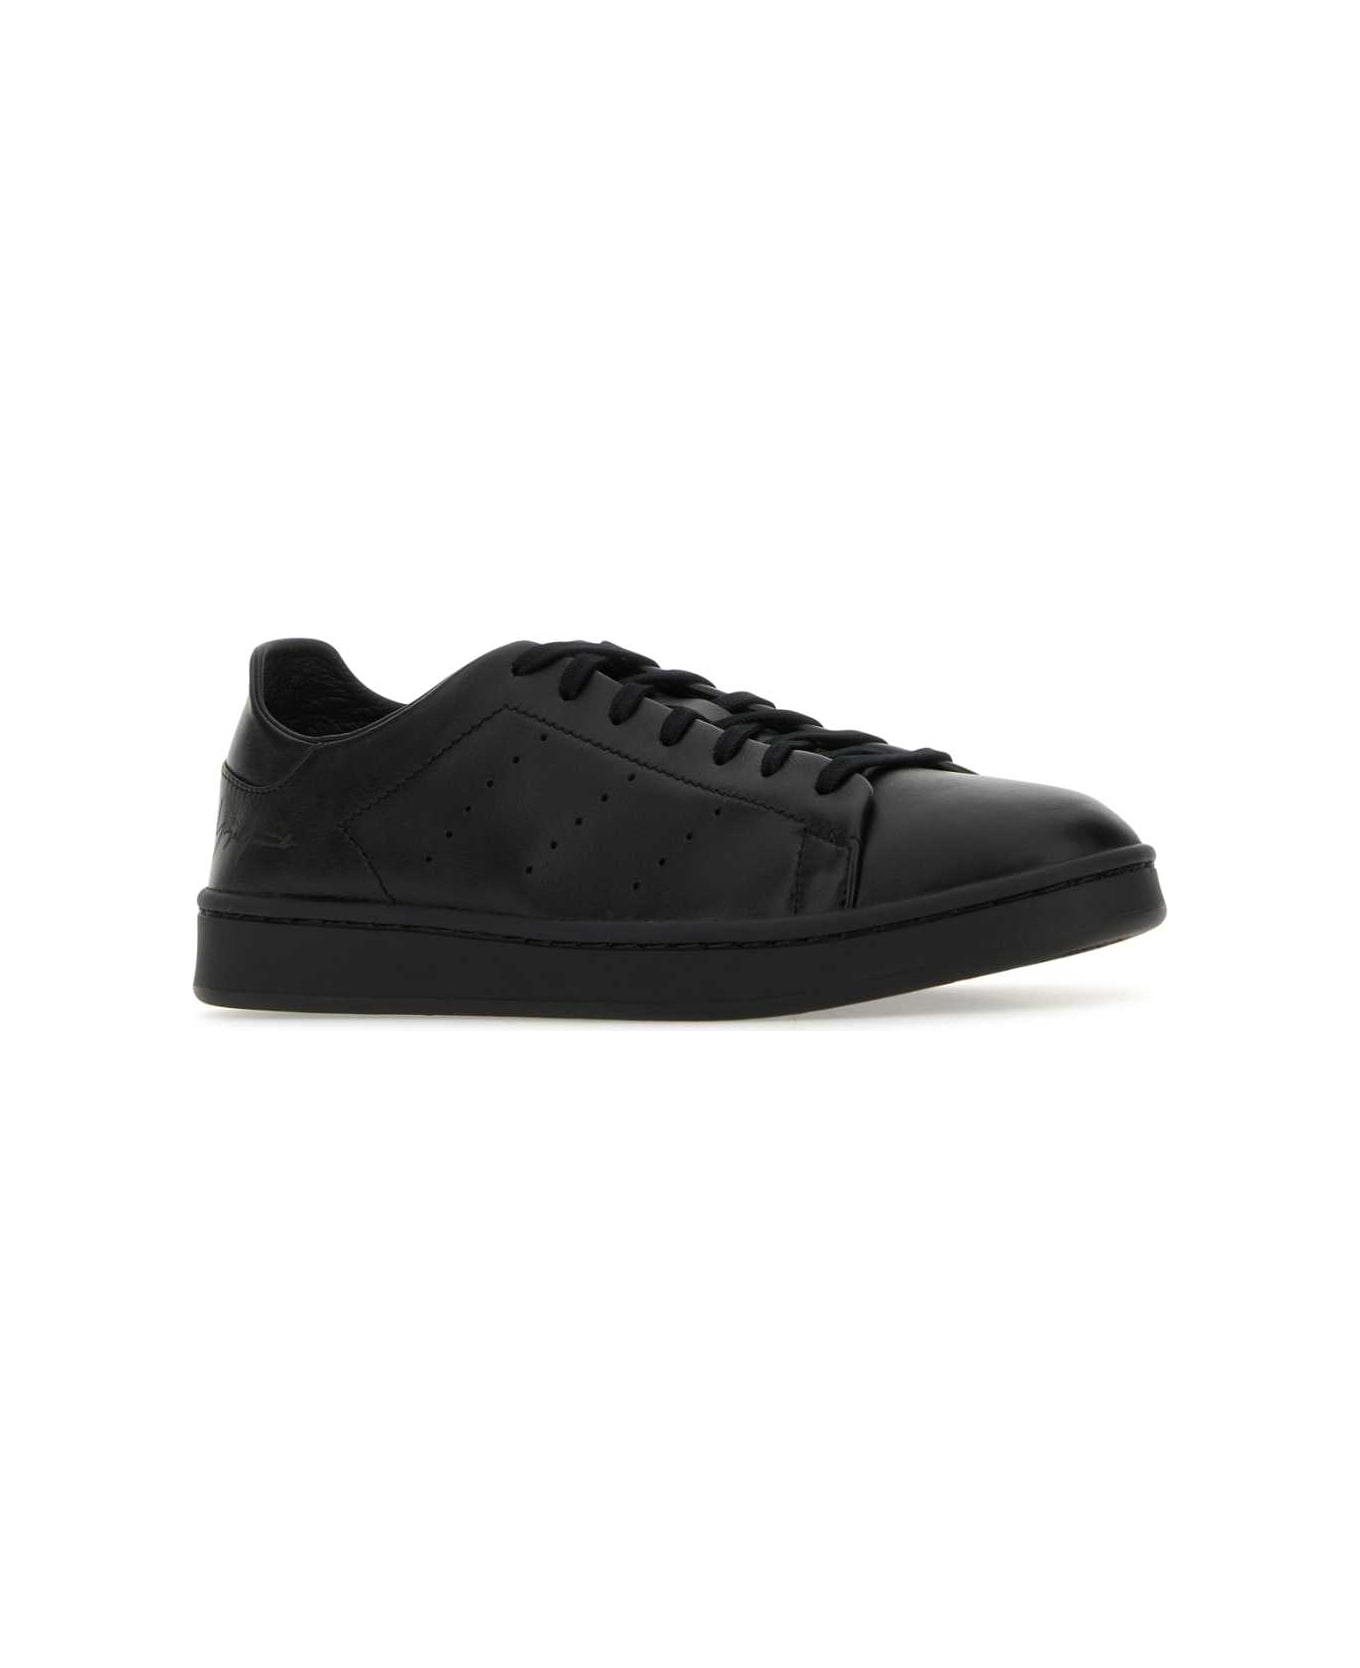 Y-3 Black Leather Stan Smith Sneakers - BLACKBLACKBLACK